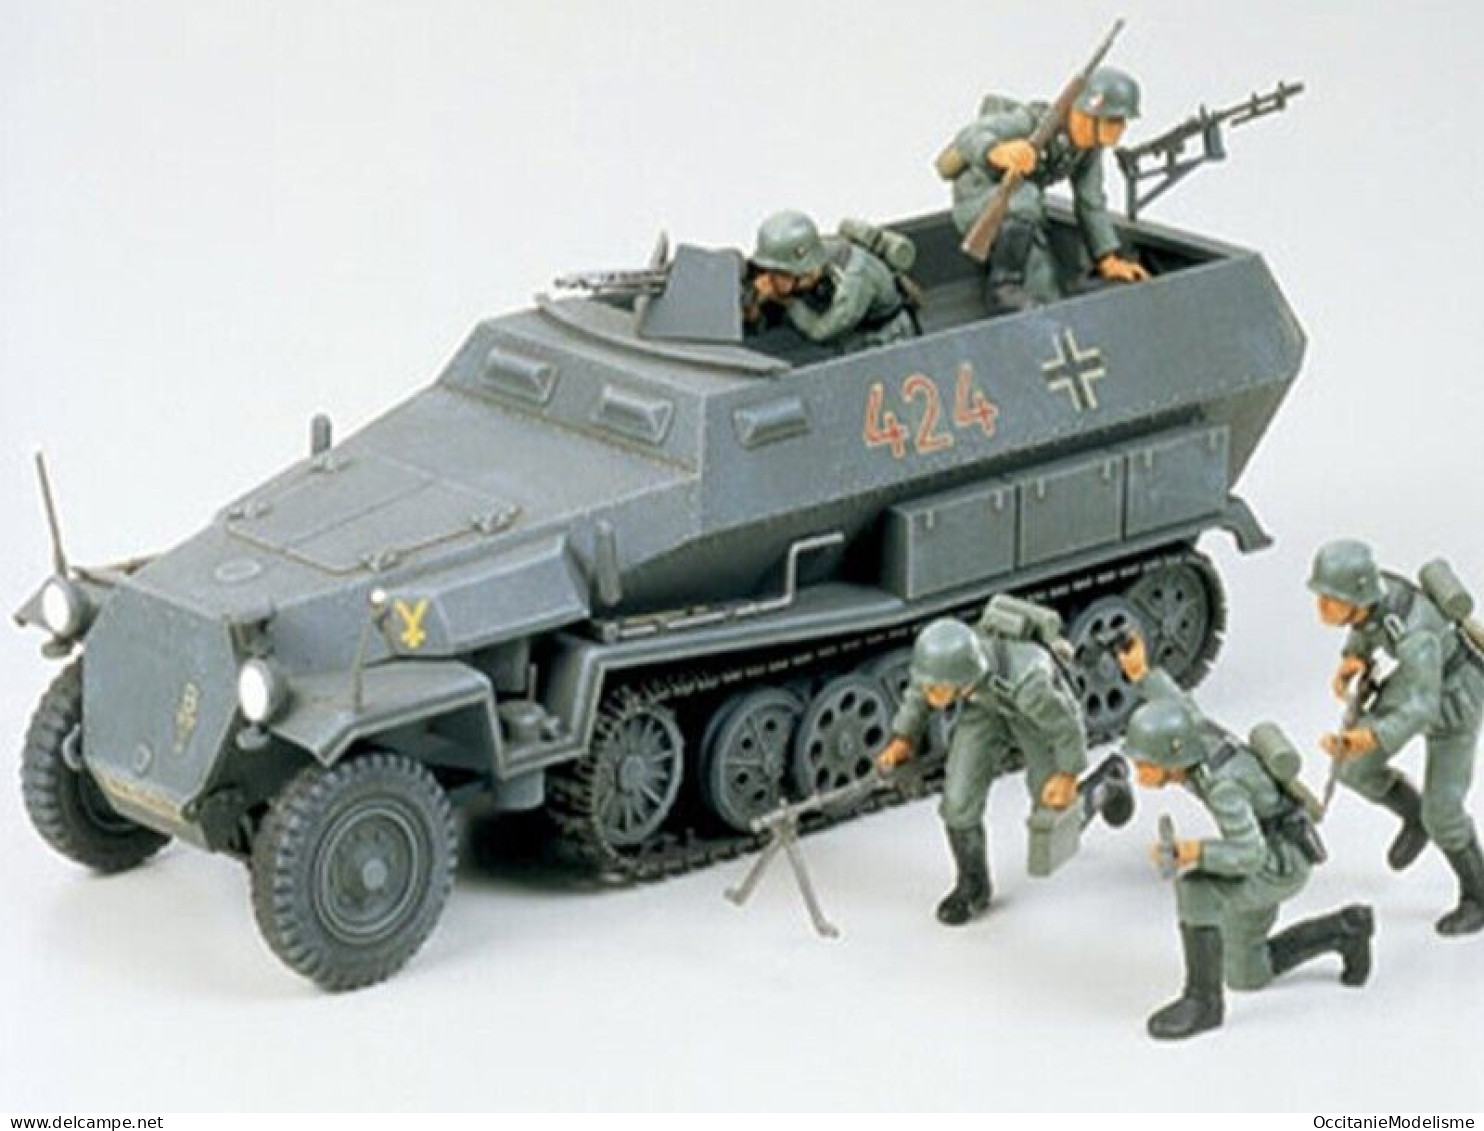 Tamiya - HANOMAG Sdkfz 251/1 + 5 Figurines WWII Militaire Maquette Kit Plastique Réf. 35020 BO 1/35 - Militaire Voertuigen